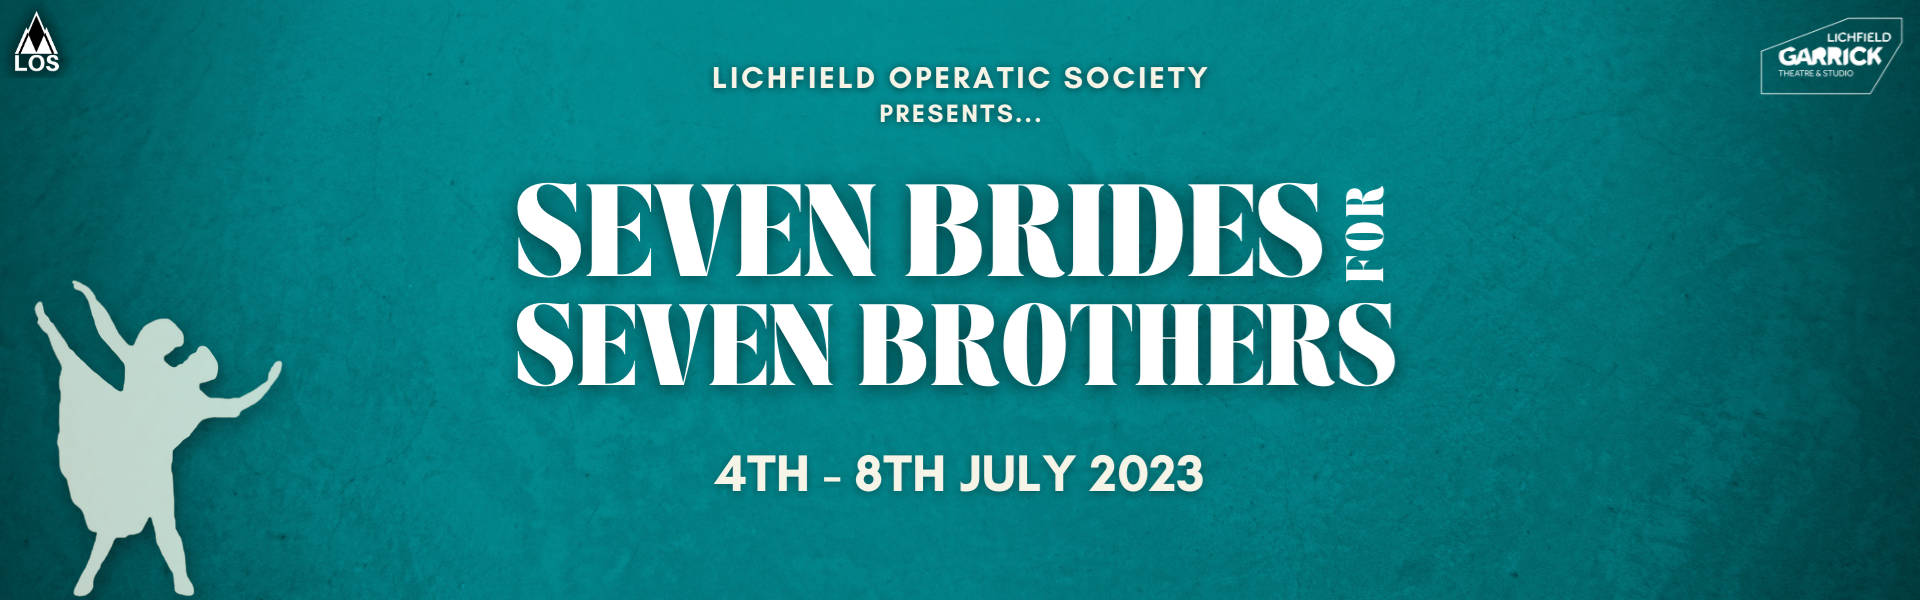 Seven Brides for Seven Brothers - Lichfield Operatic Society